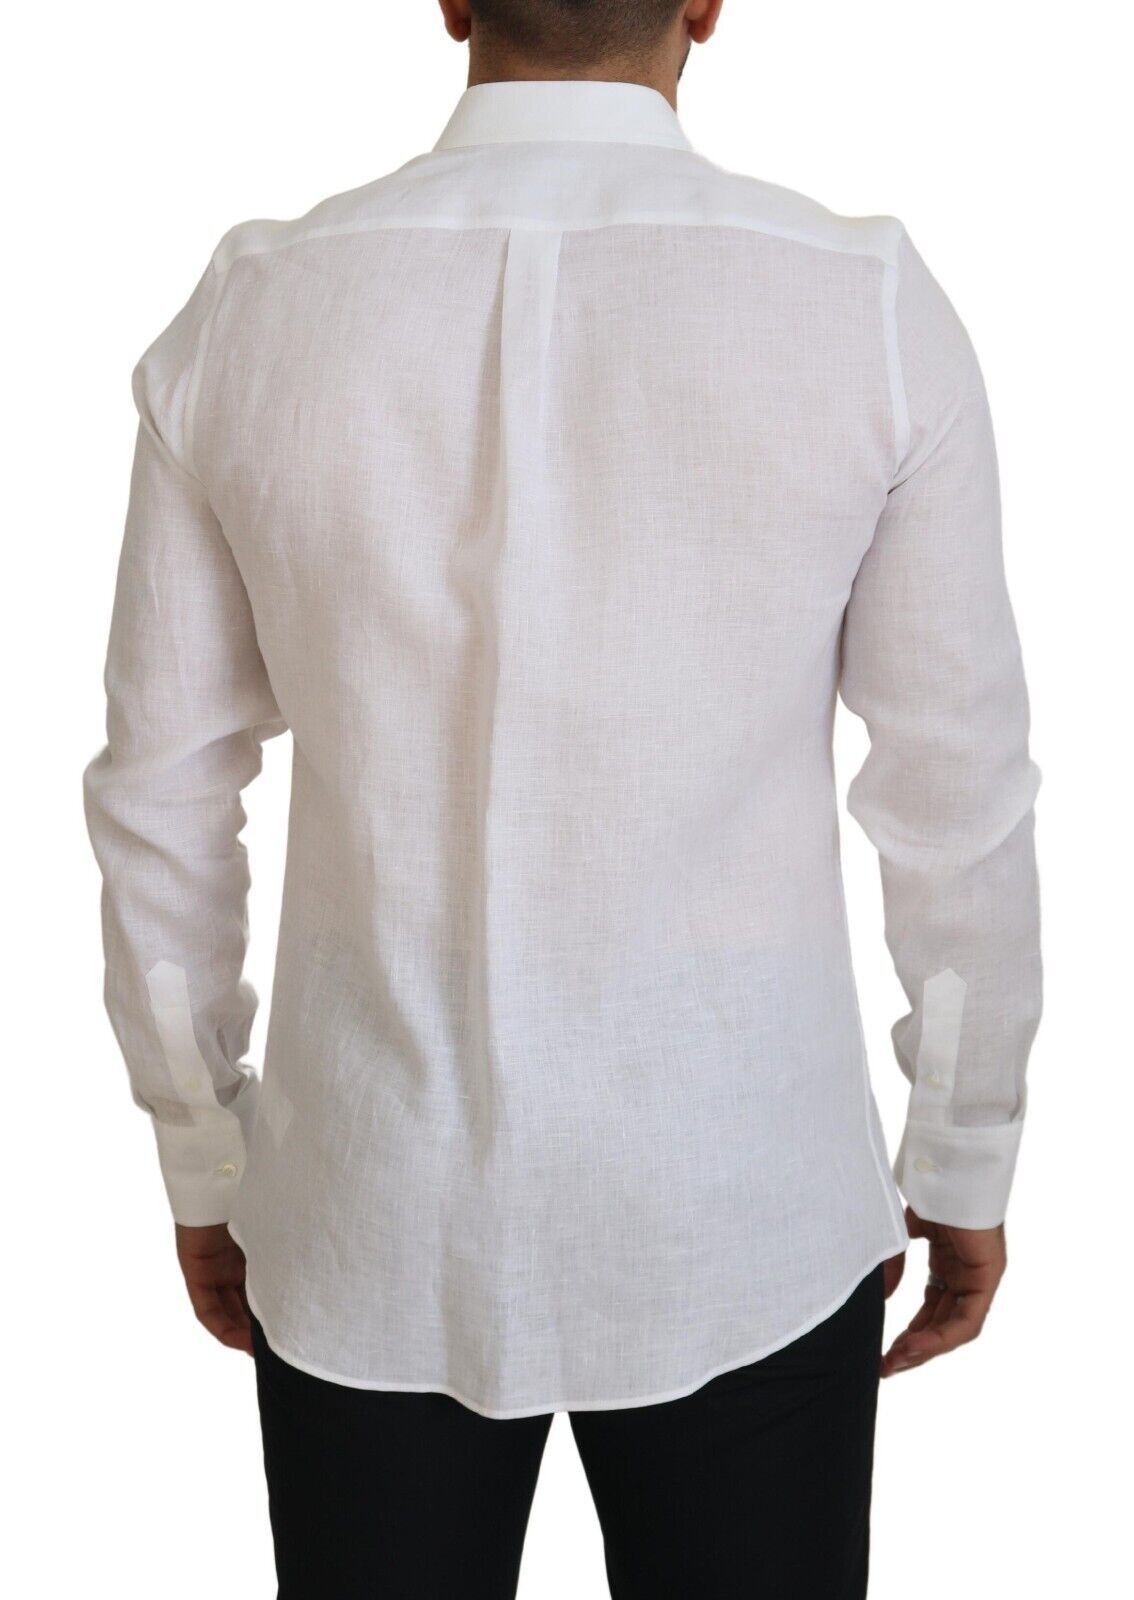 White Linen Flax Dress Formal MARTINI Shirt